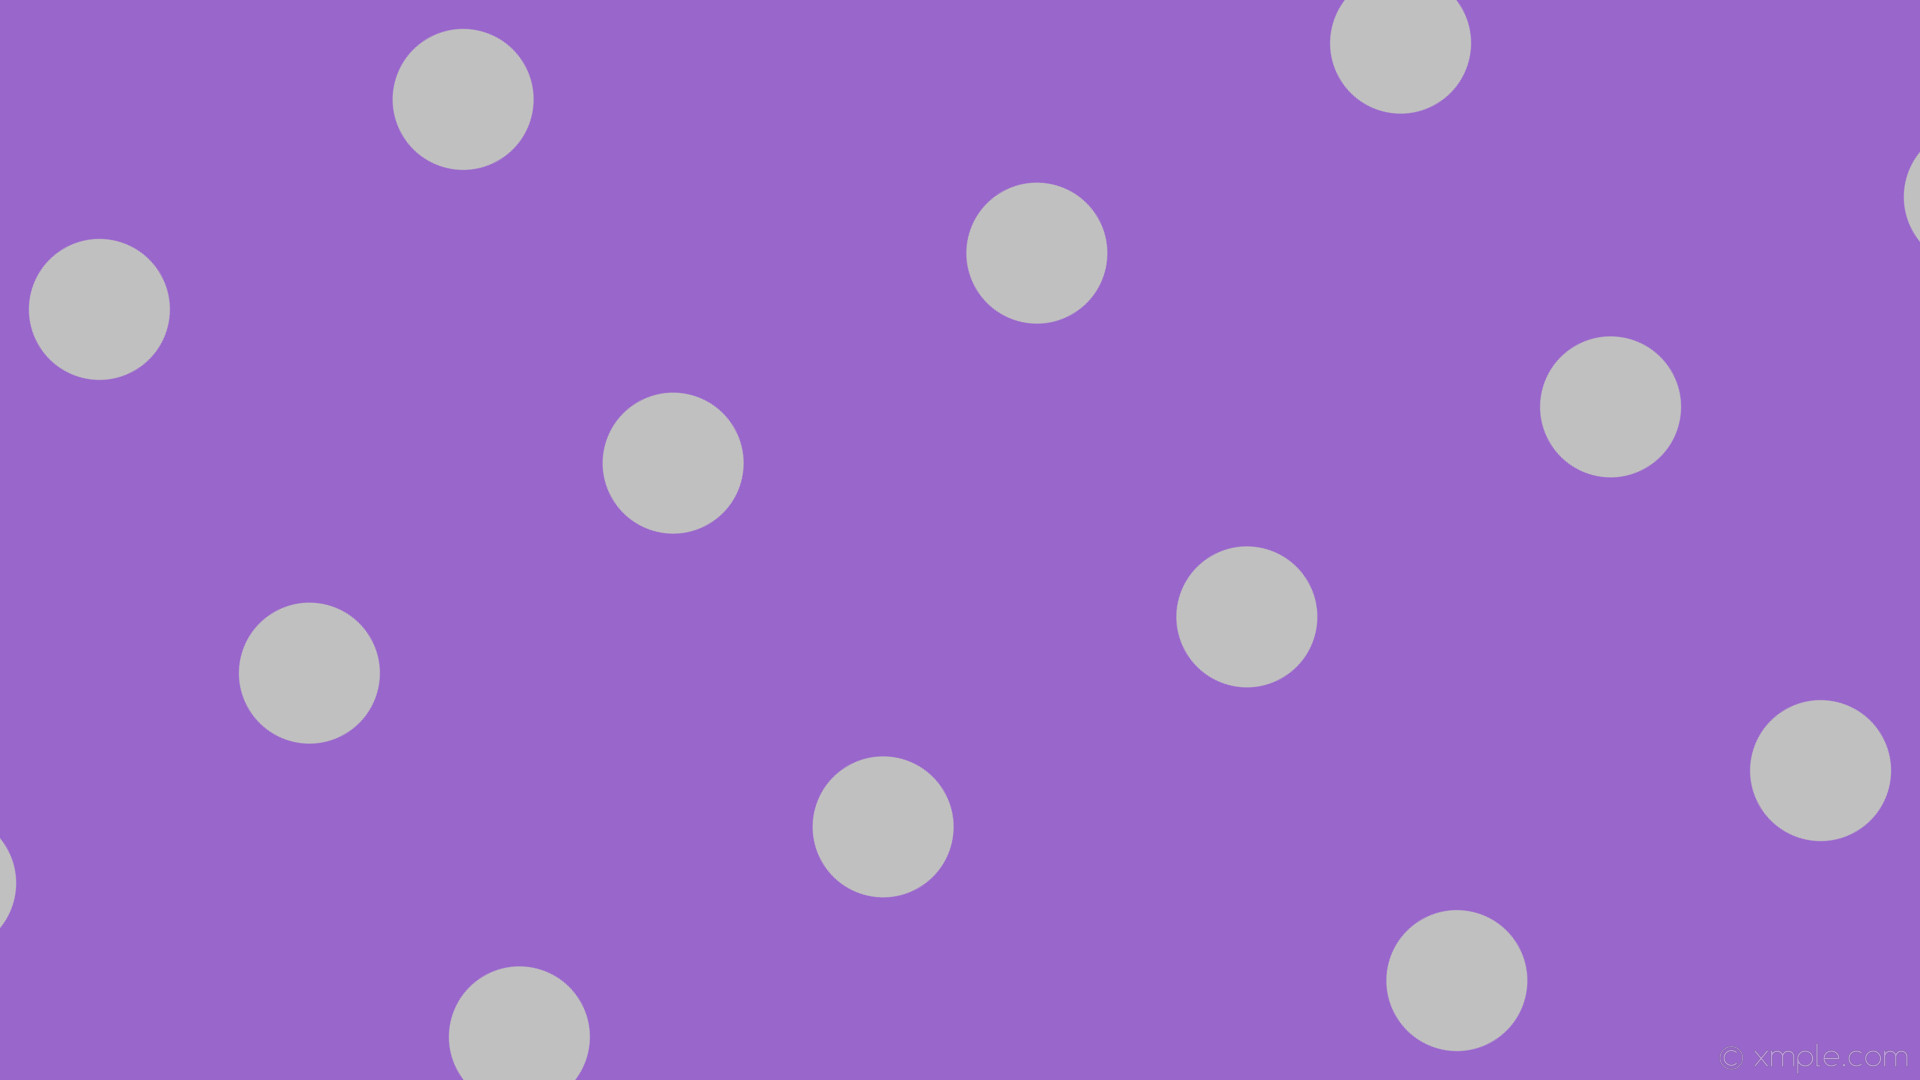 1920x1080 wallpaper purple grey spots dots polka amethyst silver #9966cc #c0c0c0 120Â°  141px 420px